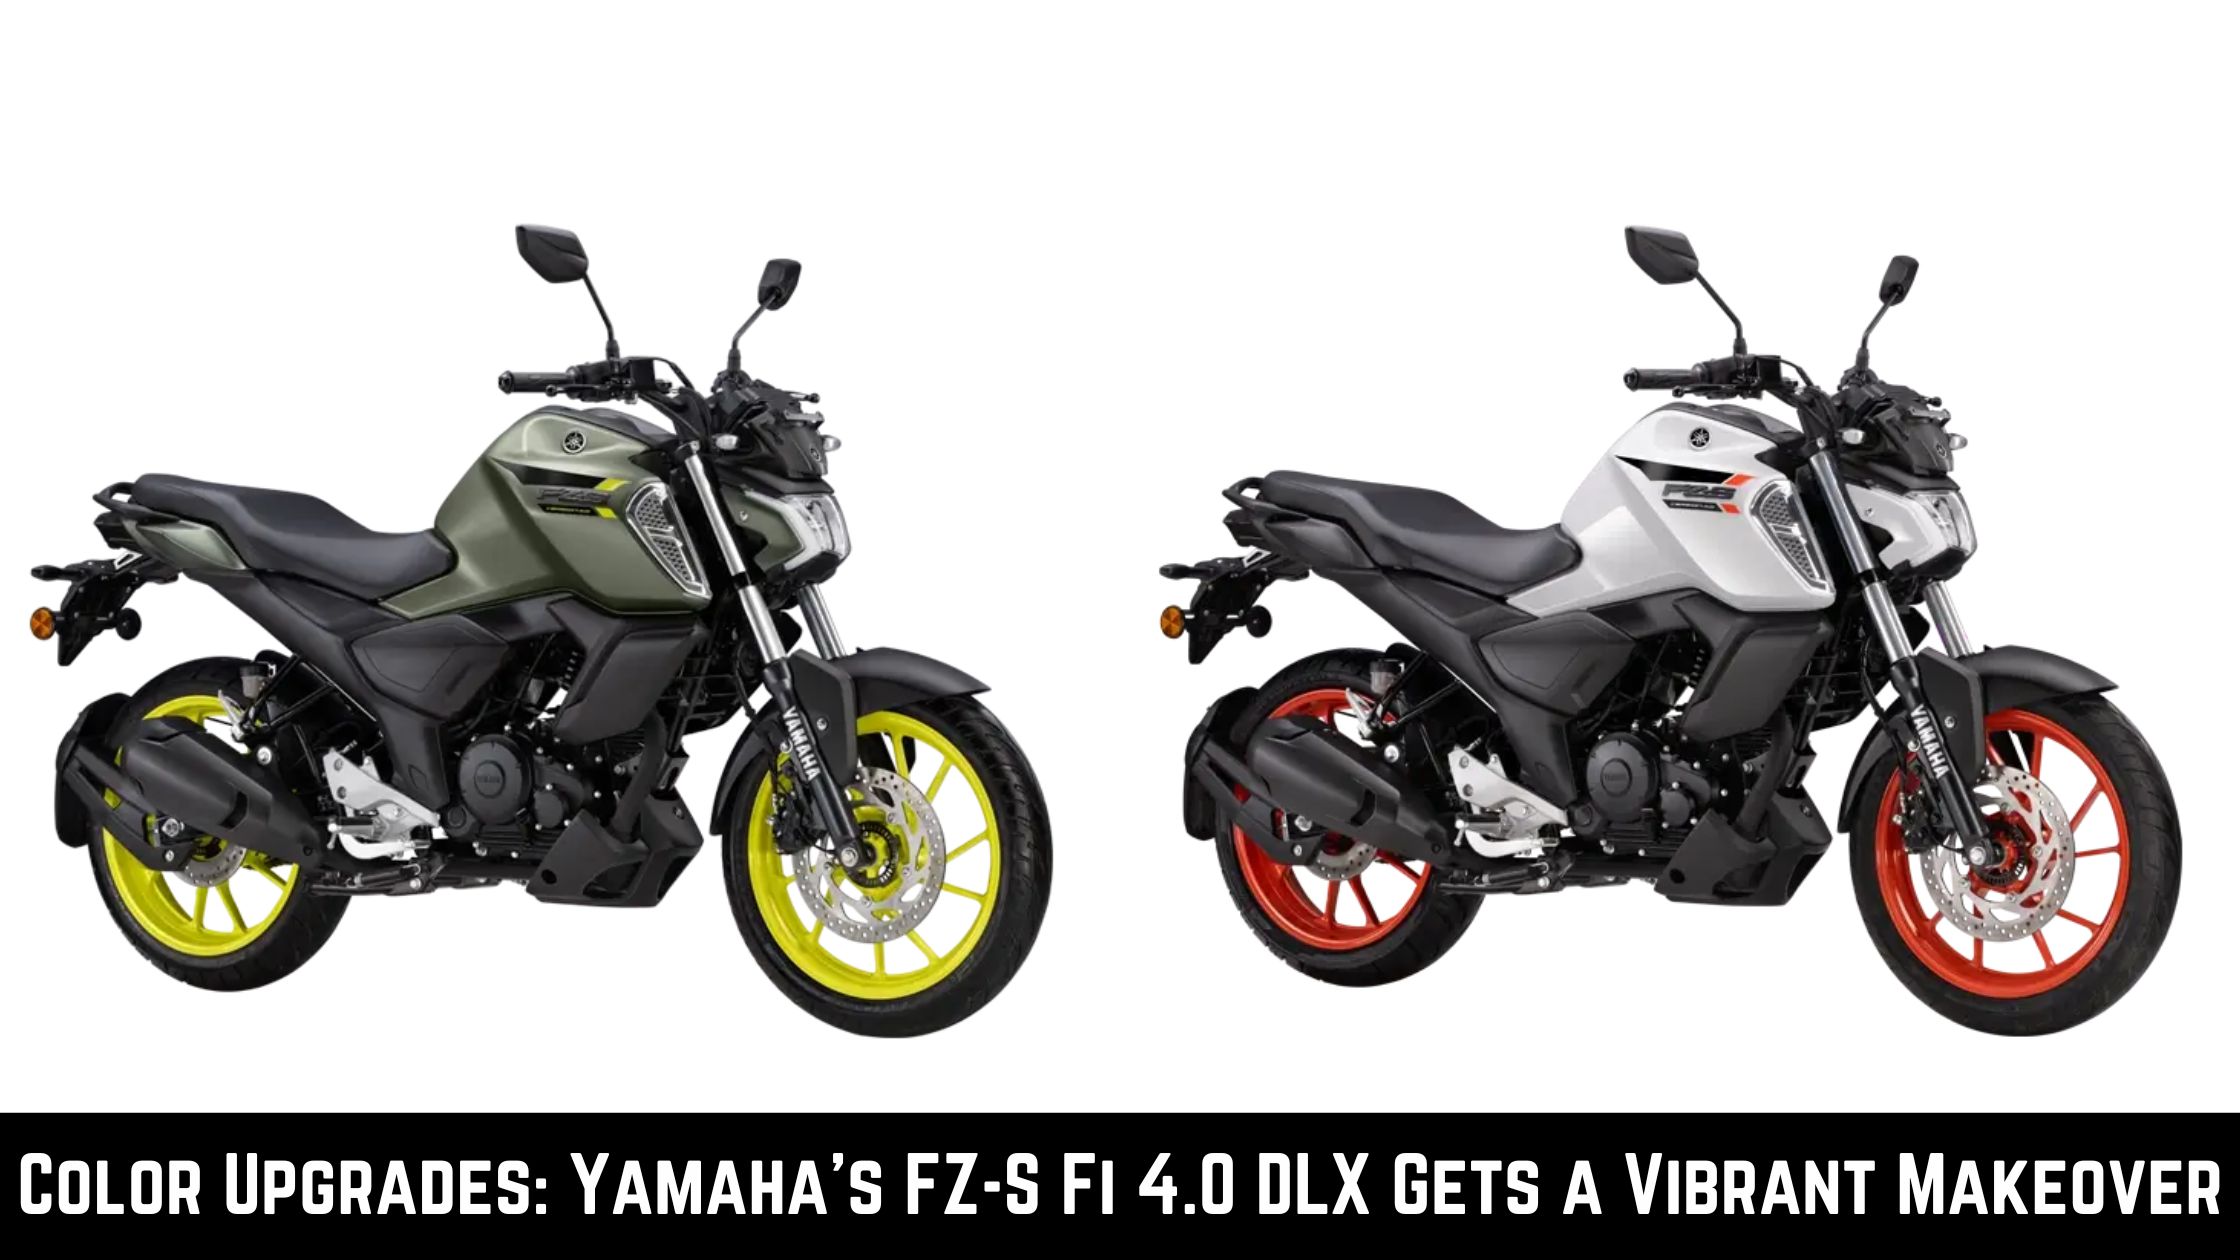 Yamaha's FZ-S Fi 4.0 DLX Gets a Vibrant Makeover